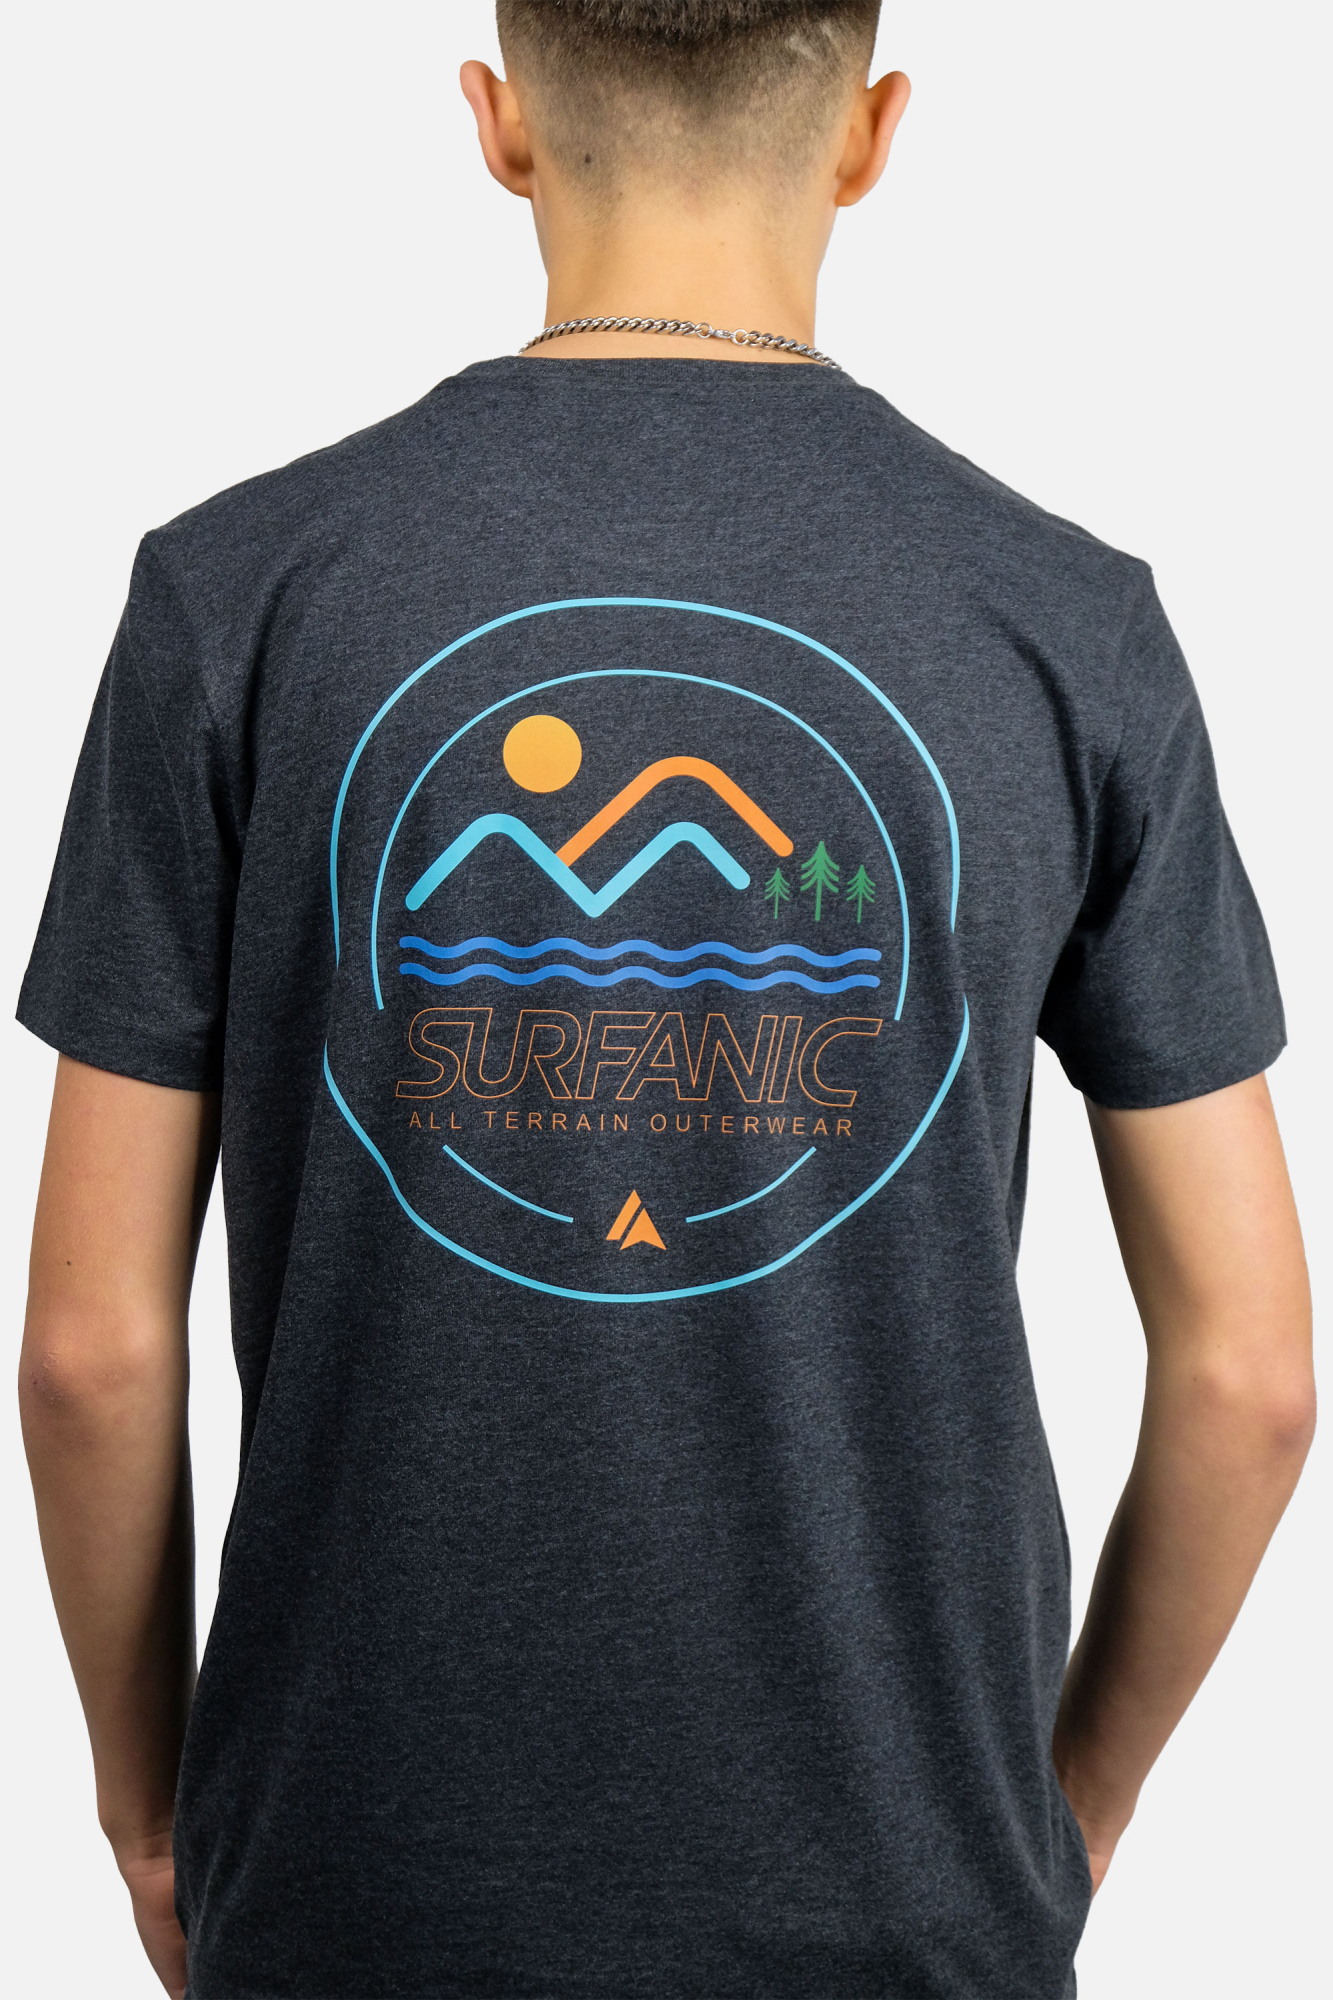 Surfanic Mens Disc T-shirt Black - Size: Medium